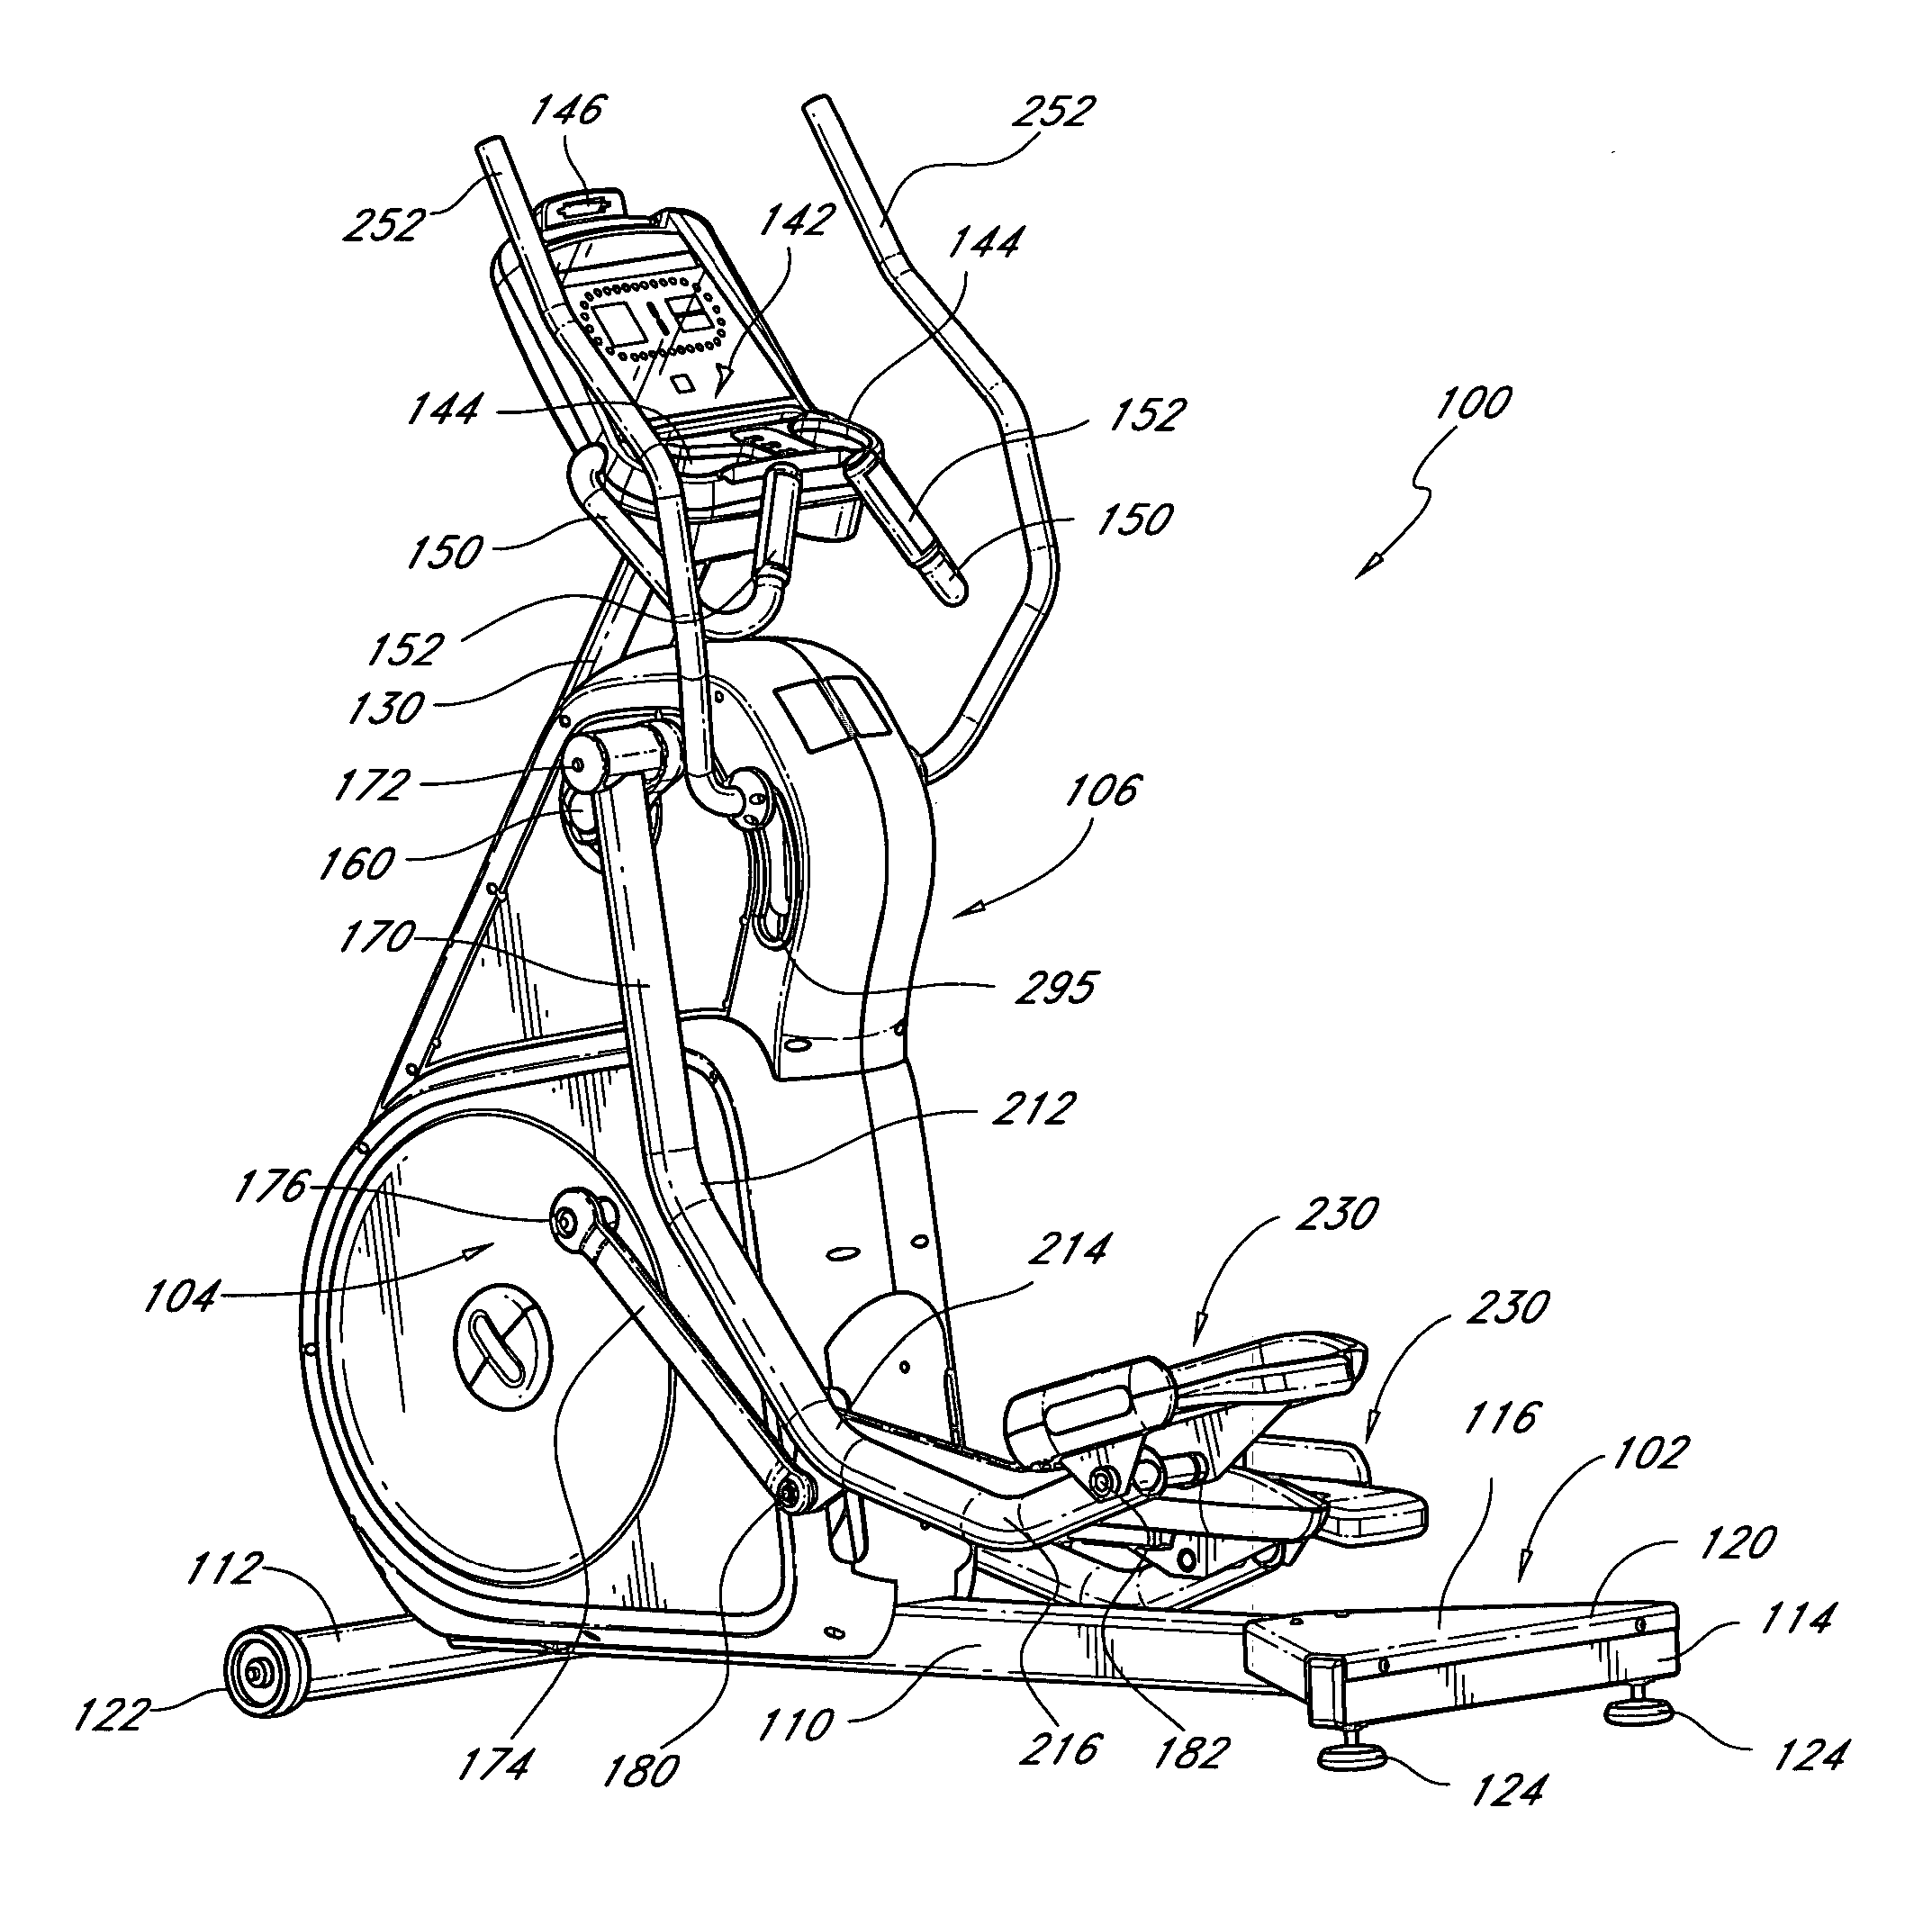 Articulating linkage exercise machine